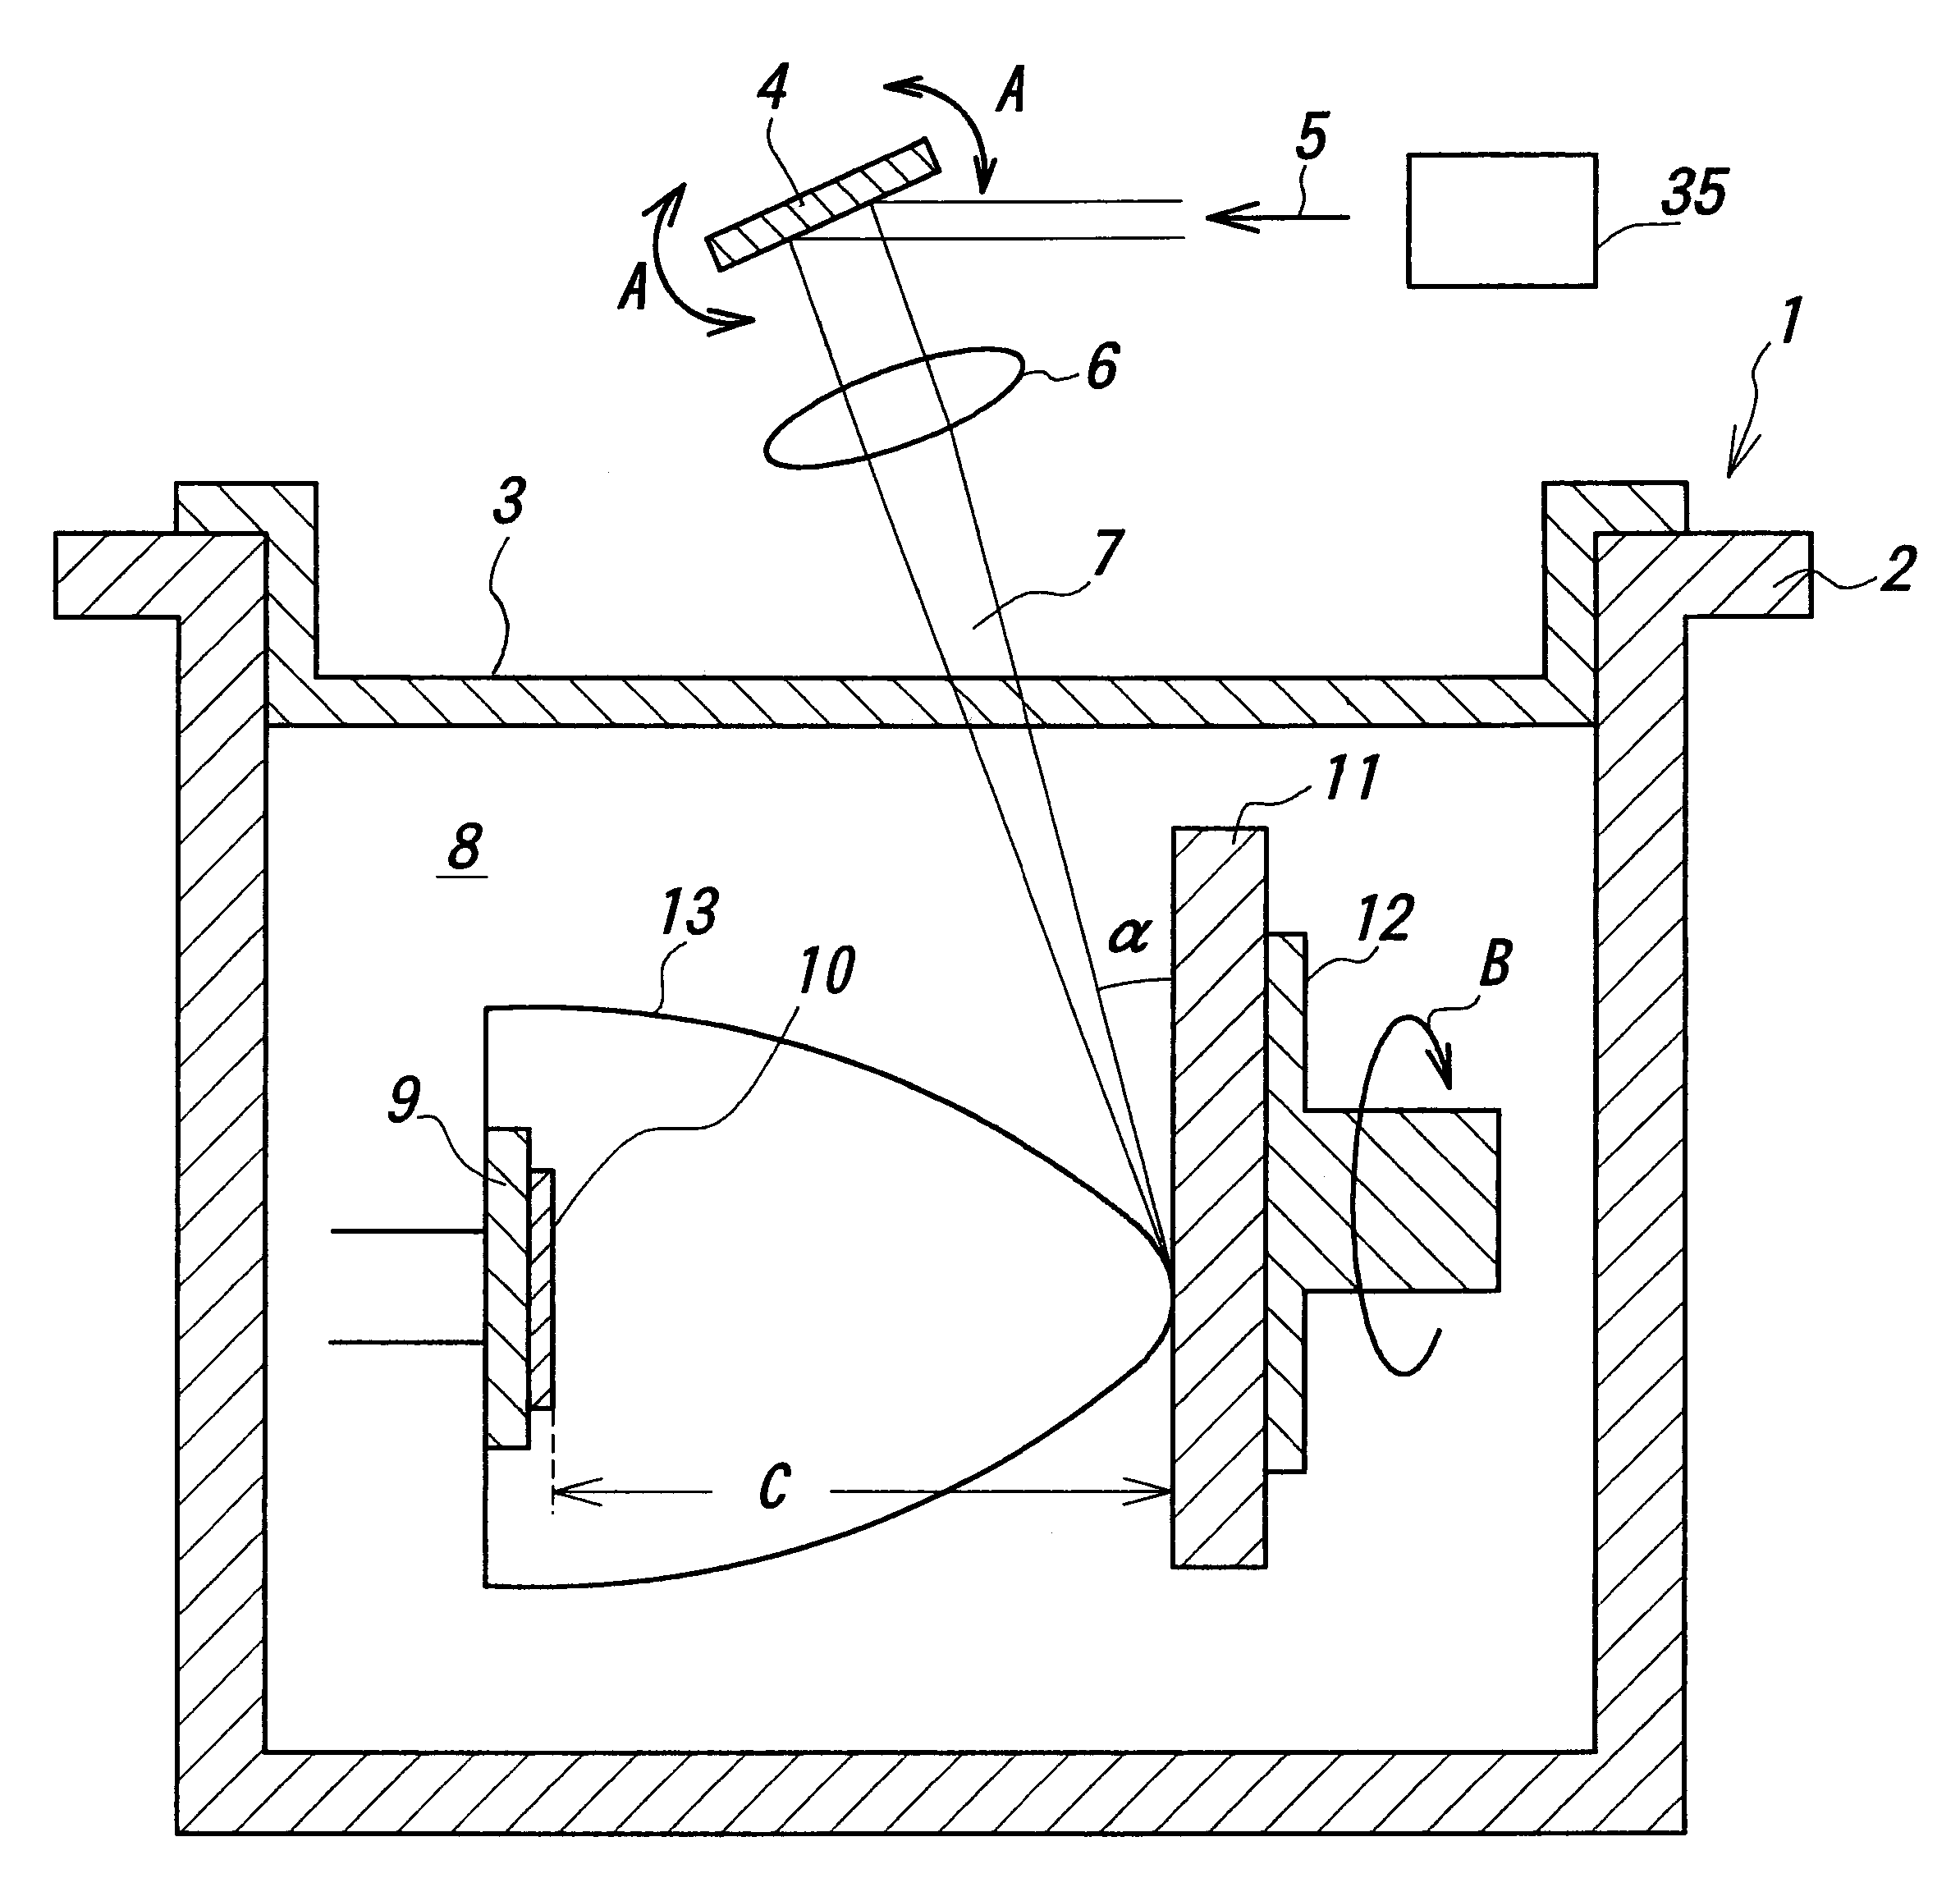 Method for producing a single-crystalline film of KLN or KLNT